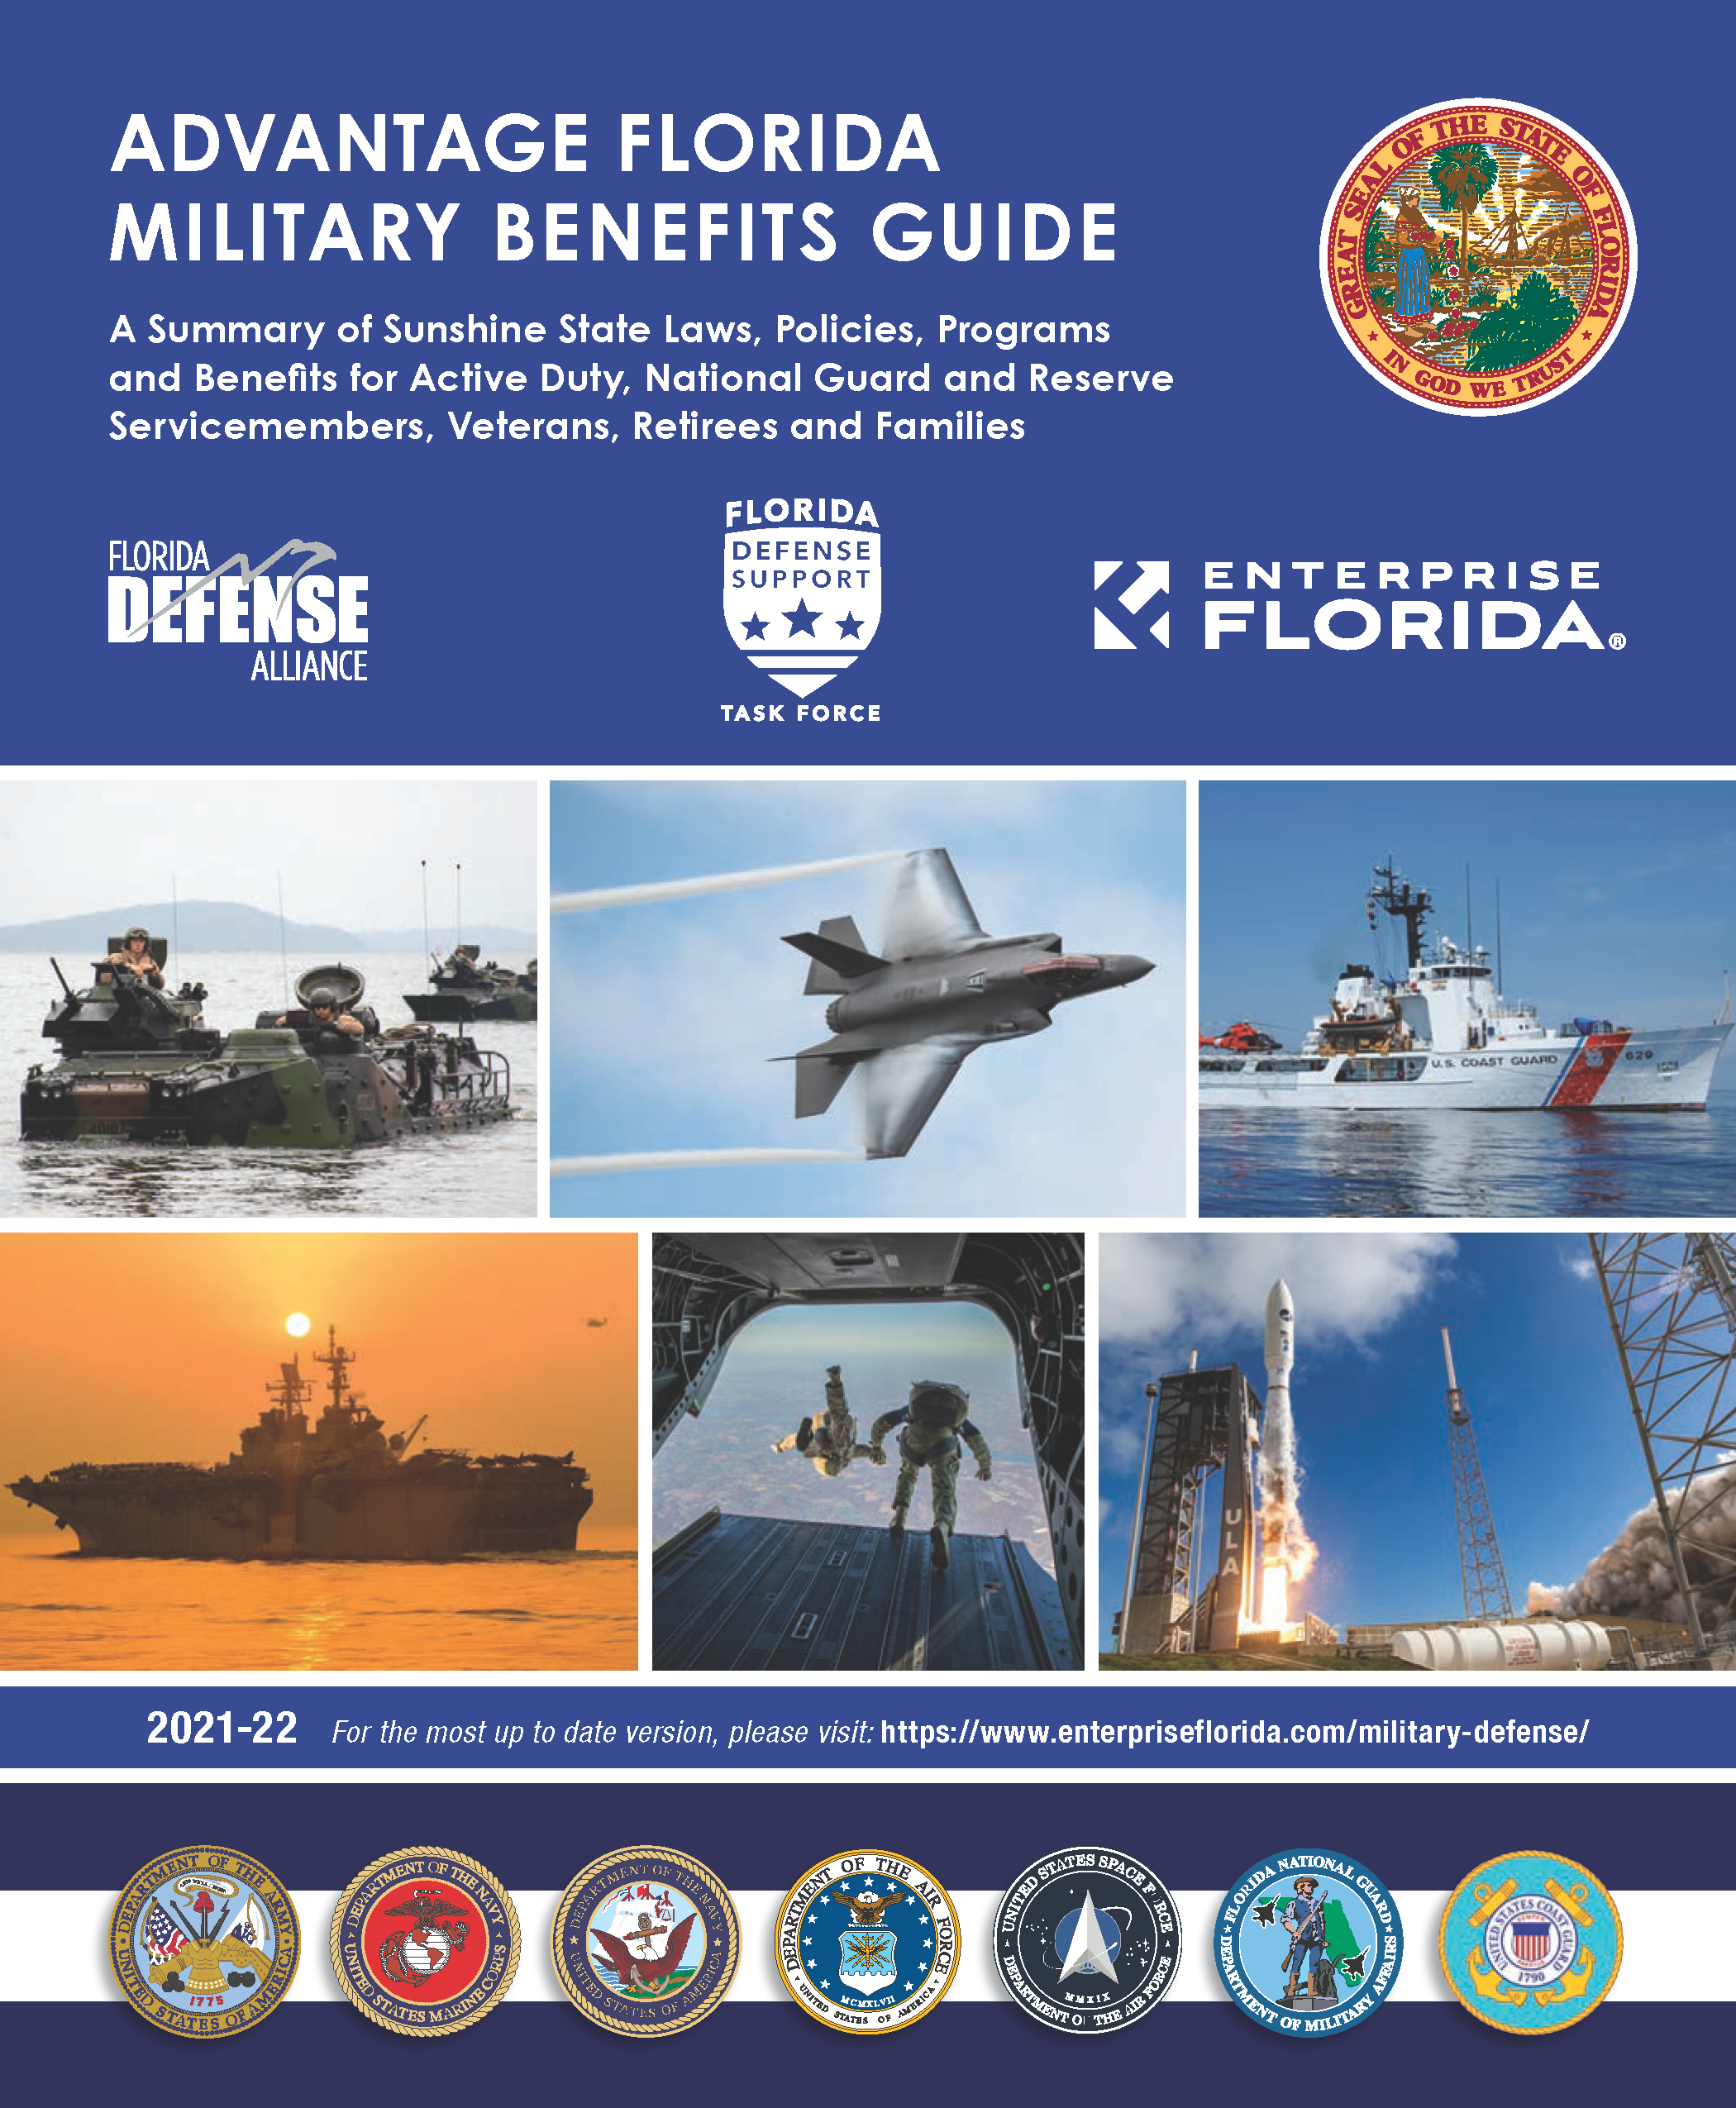  Advantage Florida Military Benefits Guide cover